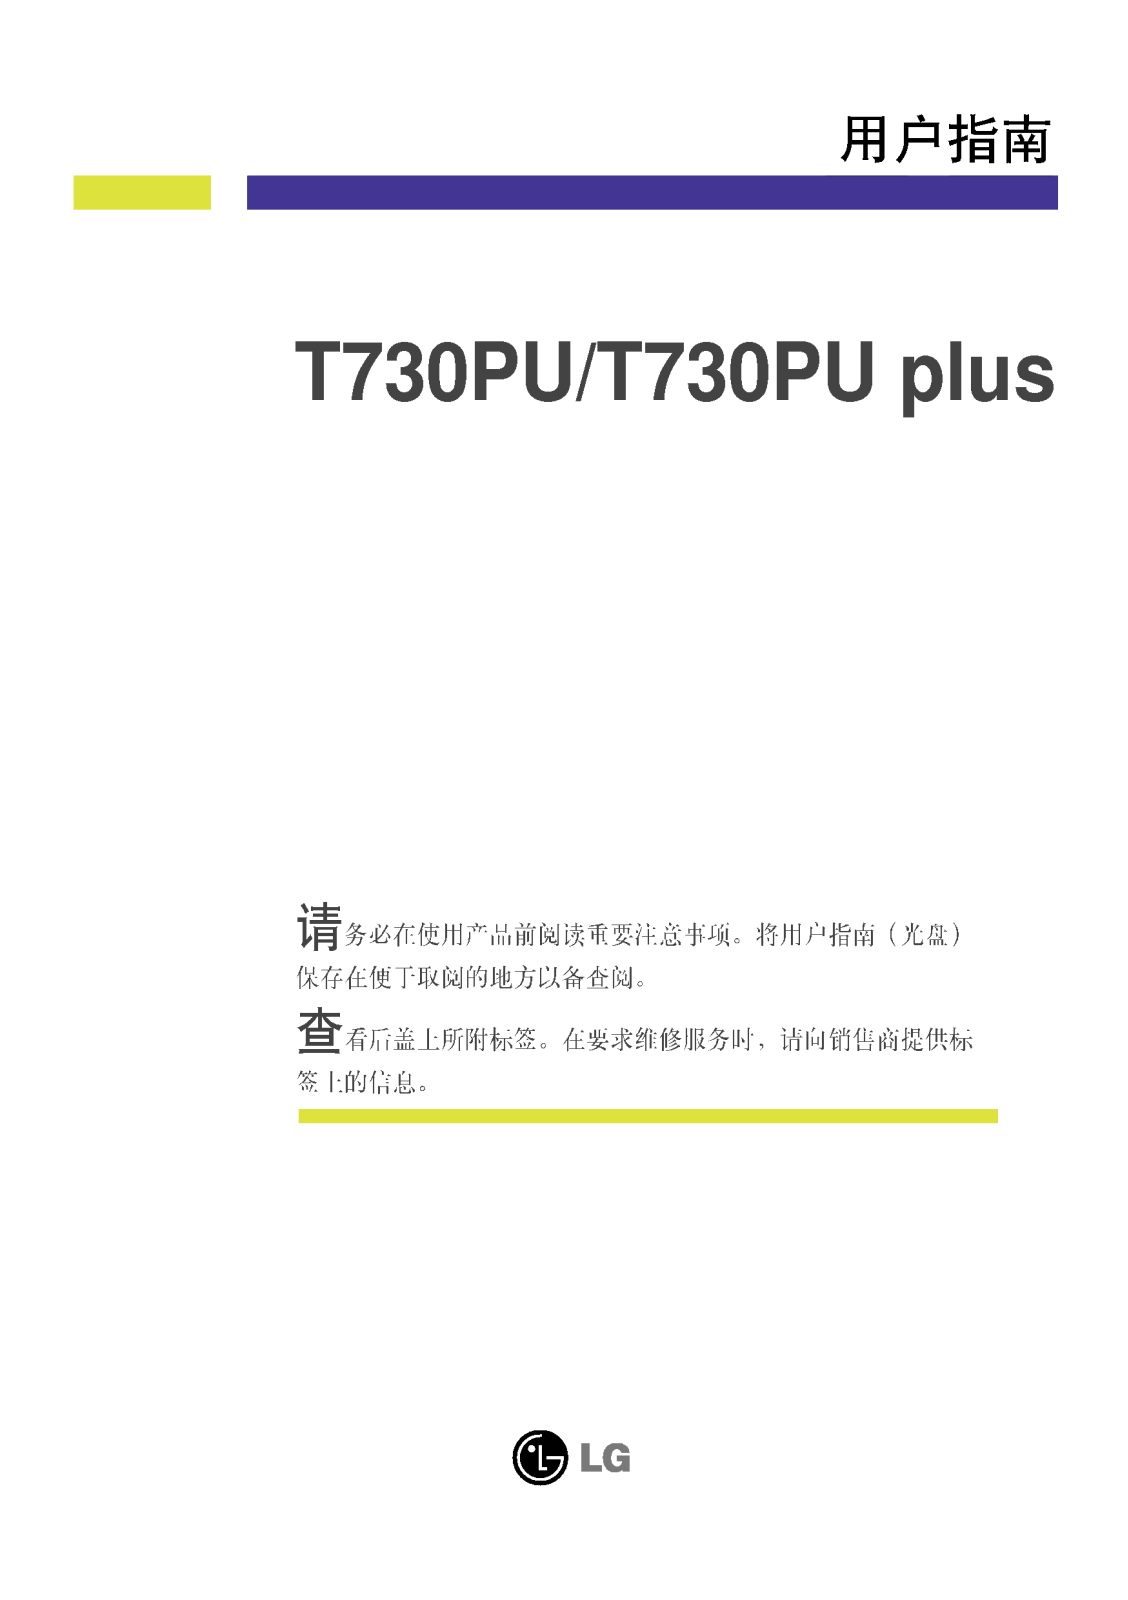 LG T730PUPK Product Manual